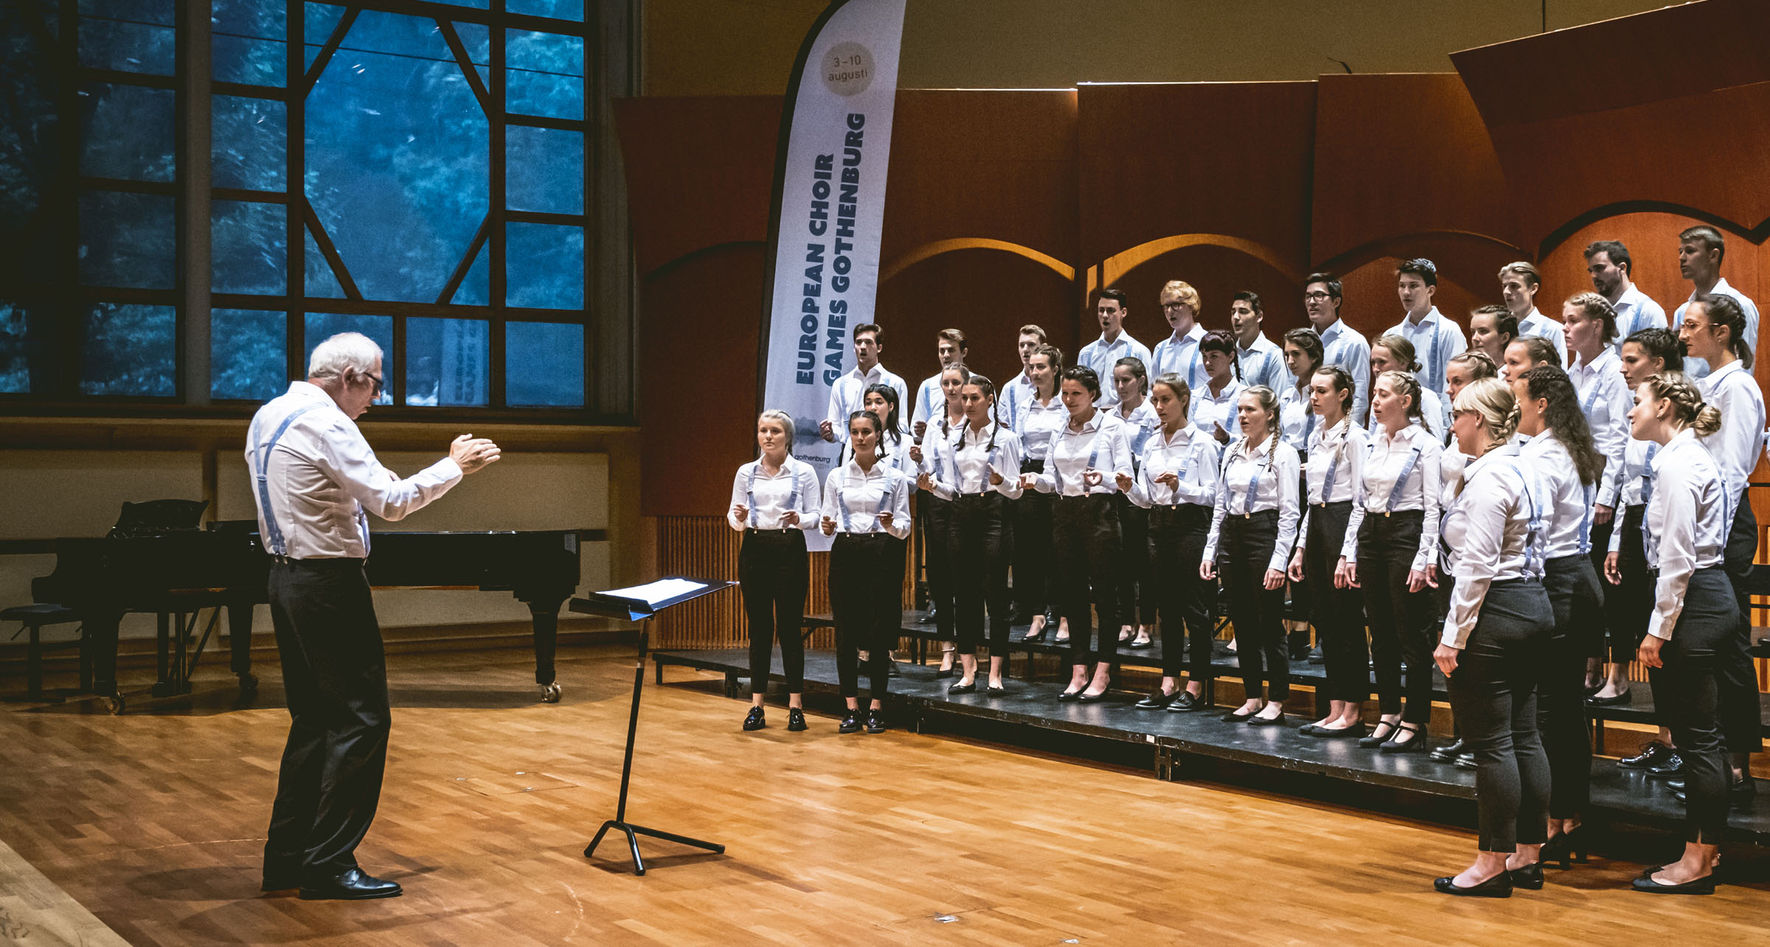 Bündner Jugendchor, Switzerland performing at the European Choir Games in 2019 © Jonas Persson